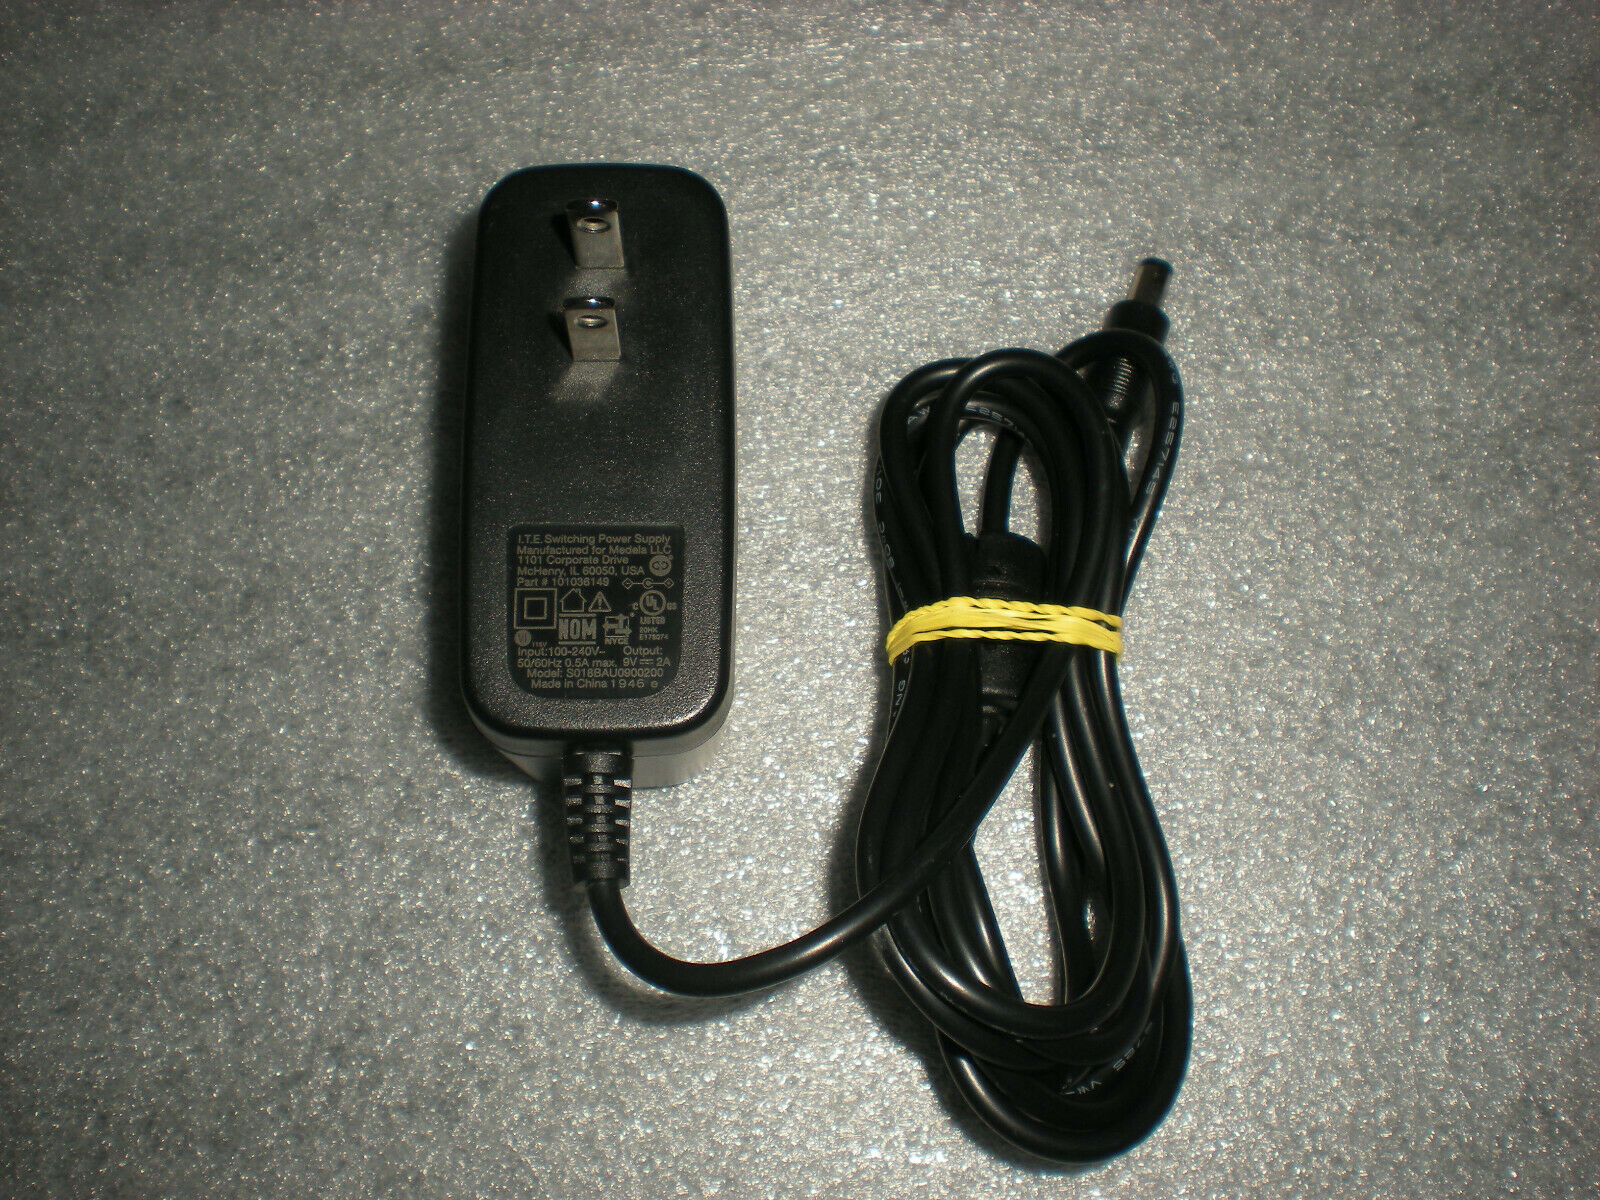 Original Medela 9V 2A AC Adapter Charger S018BAU0900200 Power Supply 101036149 Type: AC/AC Adapter Brand: Medela W